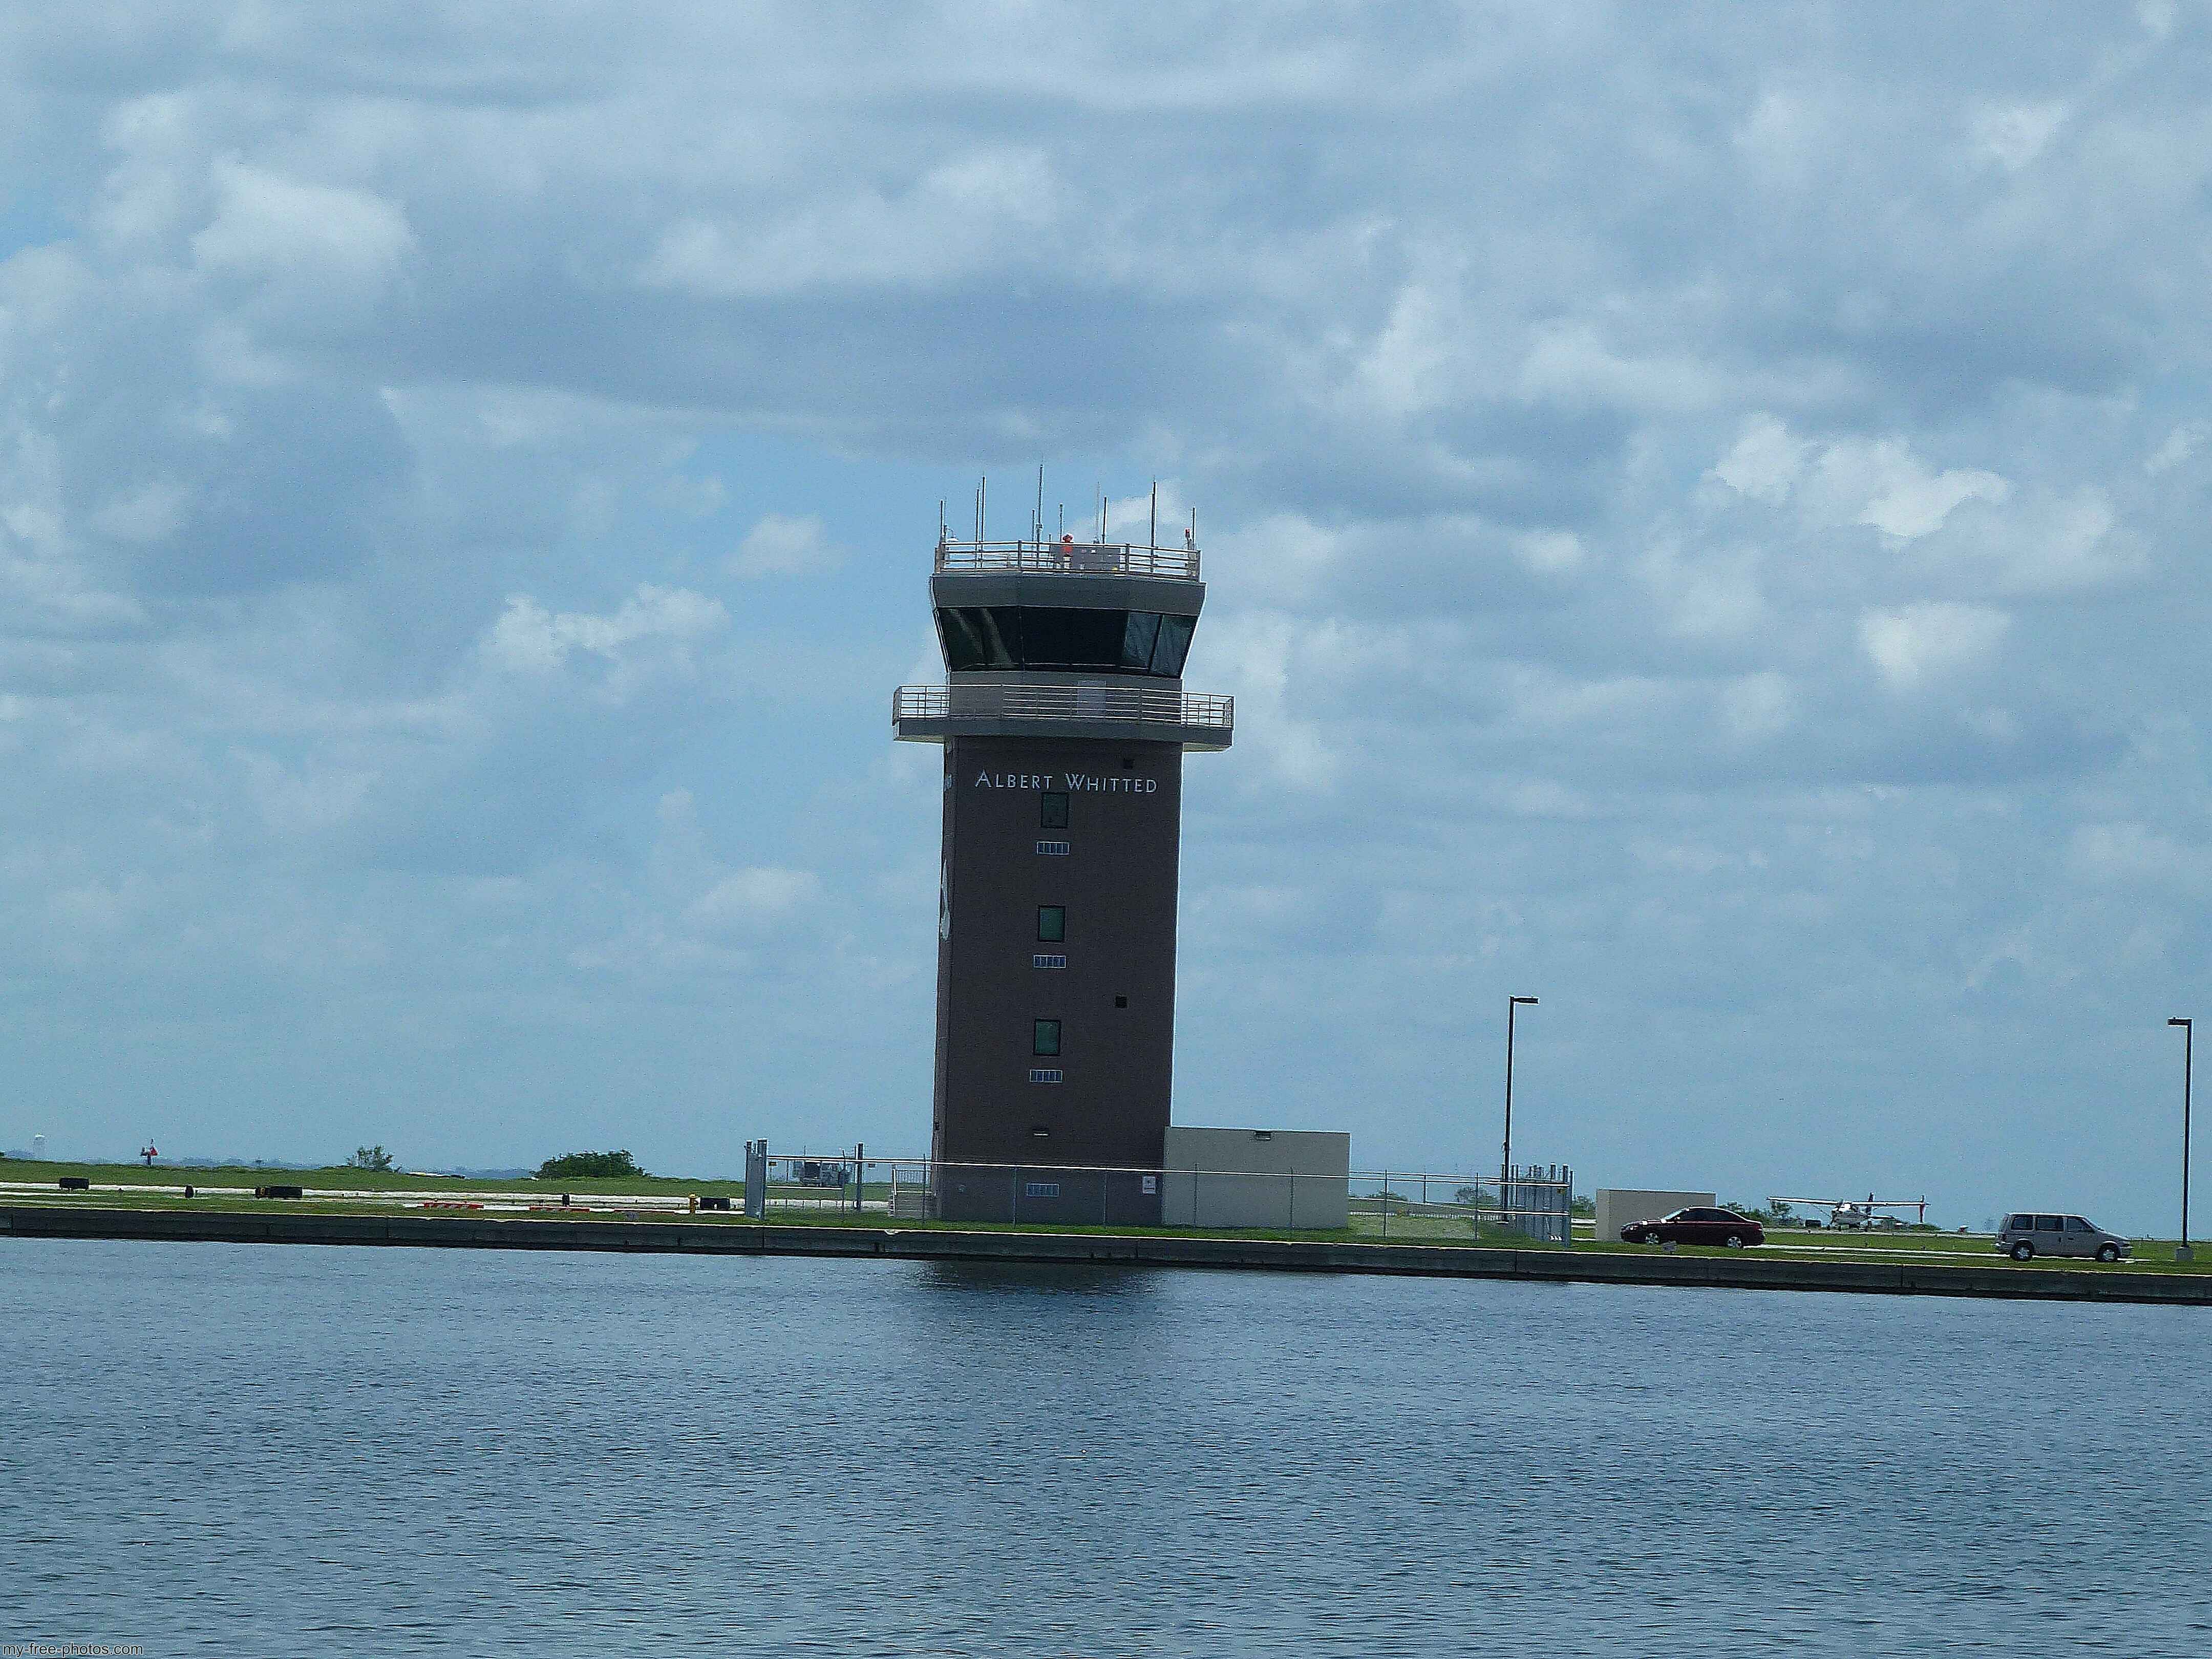 Albert Whitted Airport,St.Petersburg, Florida 